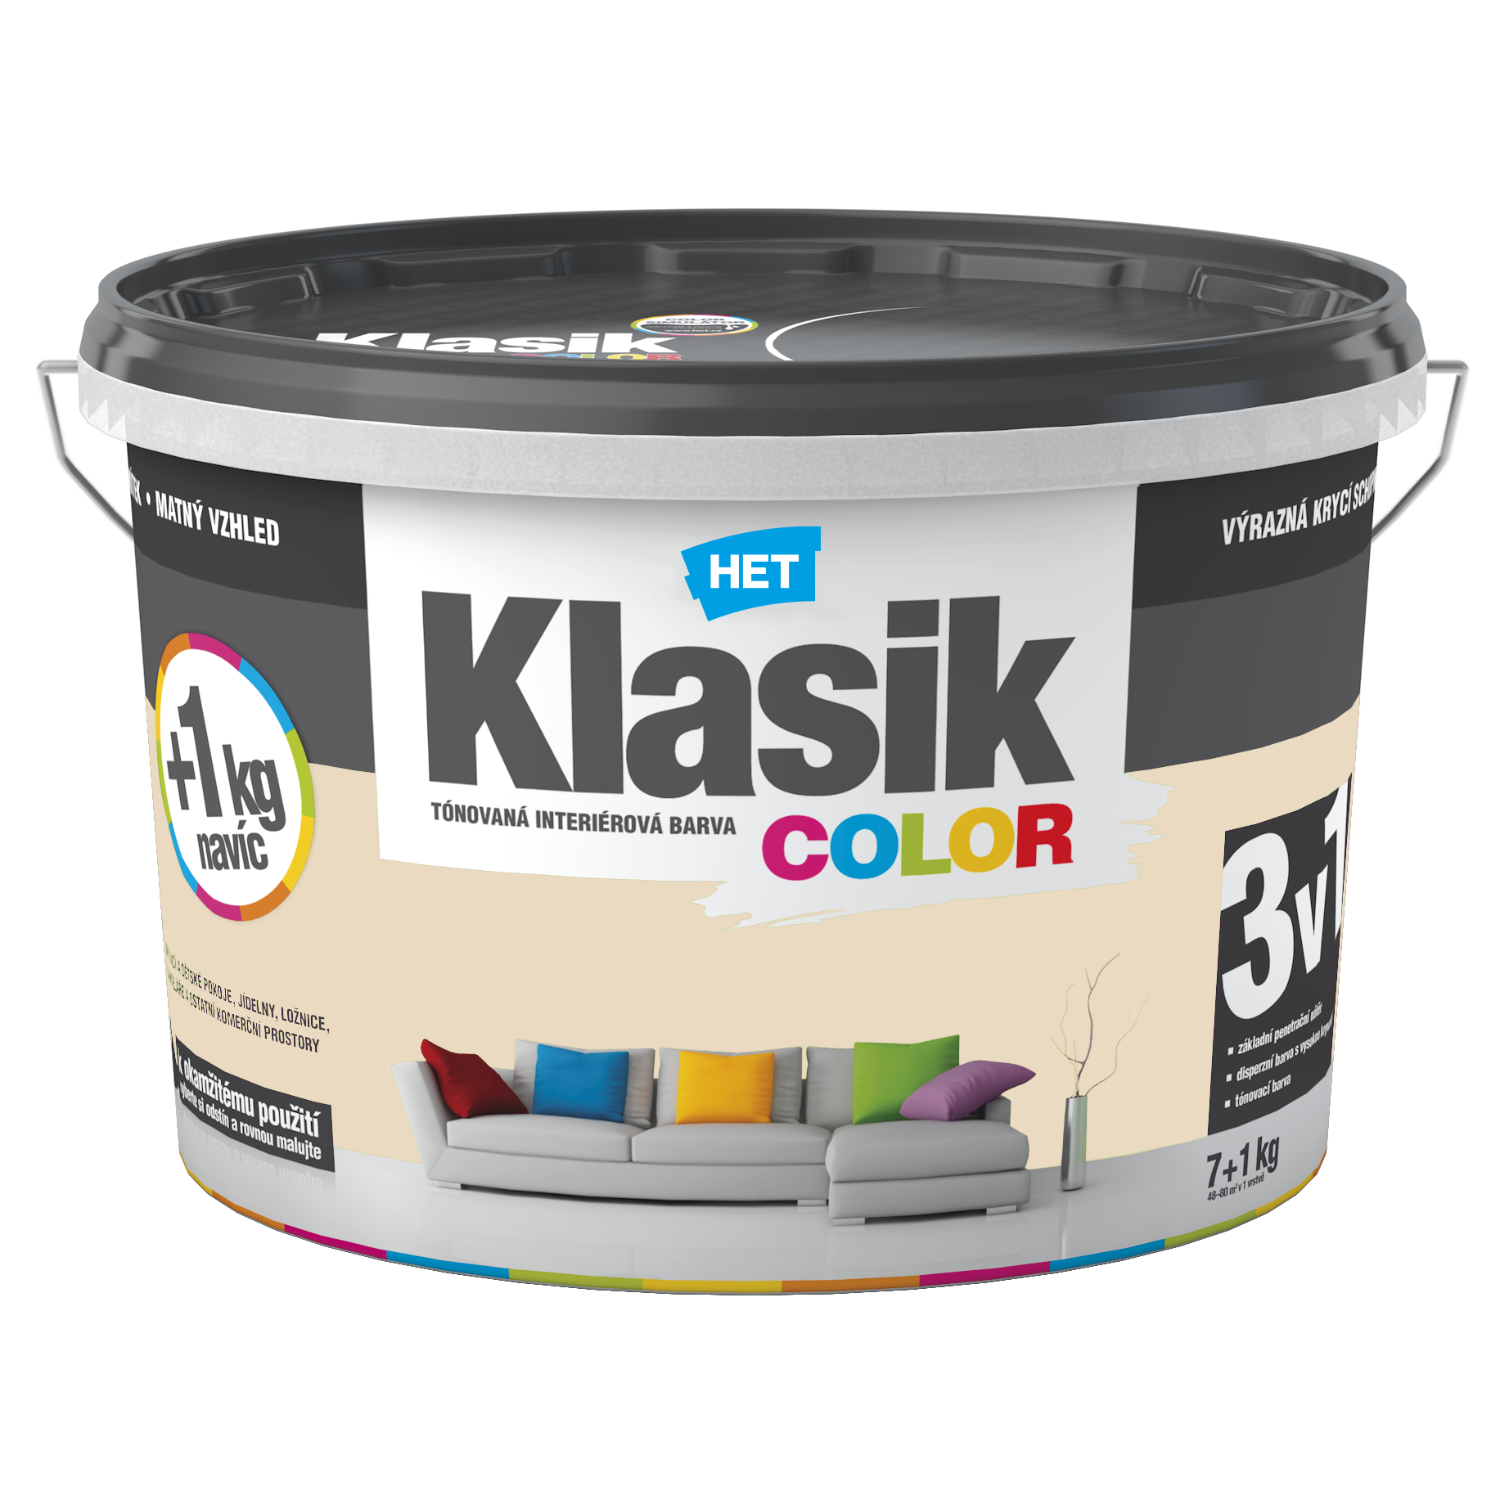 HET Klasik COLOR tónovaná interiérová akrylátová disperzná oteruvzdorná farba 7 kg + 1 kg zdarma, KC0217 - béžový kávový